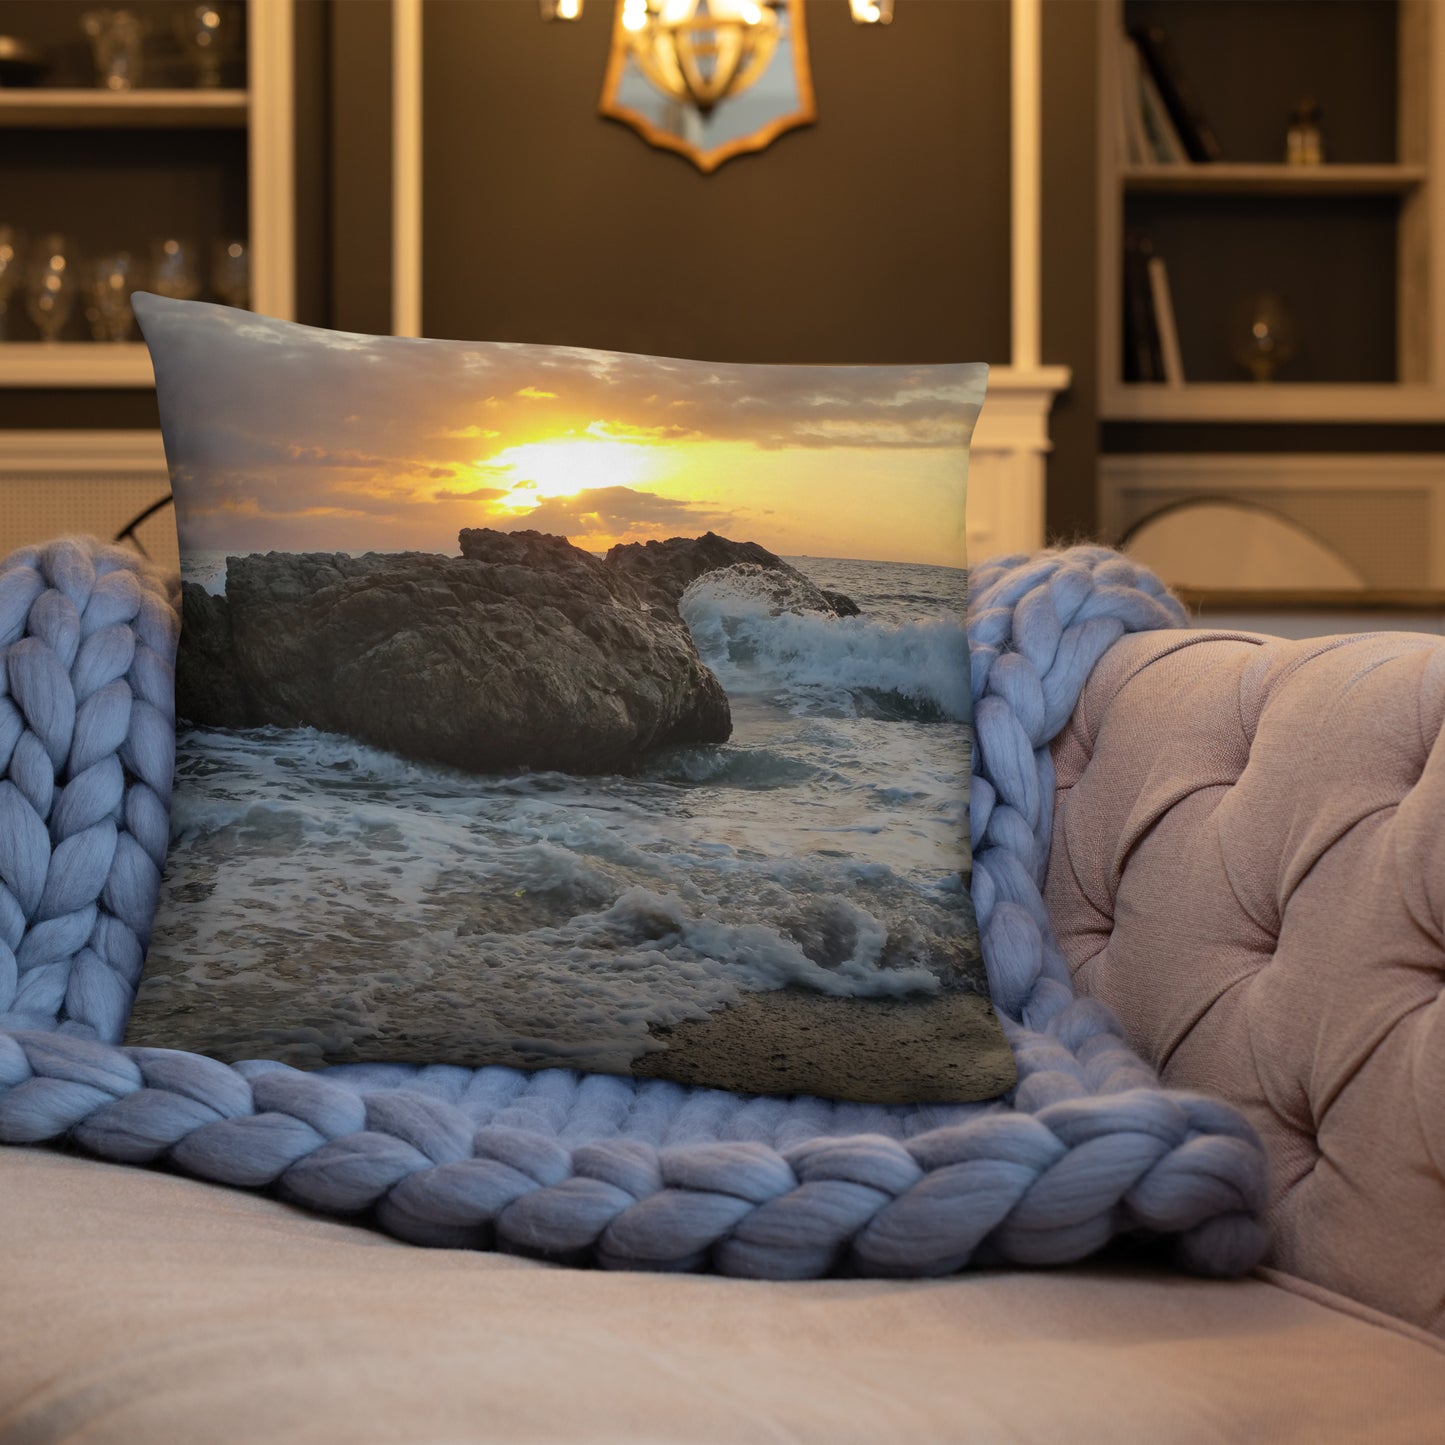 Waves Pillow